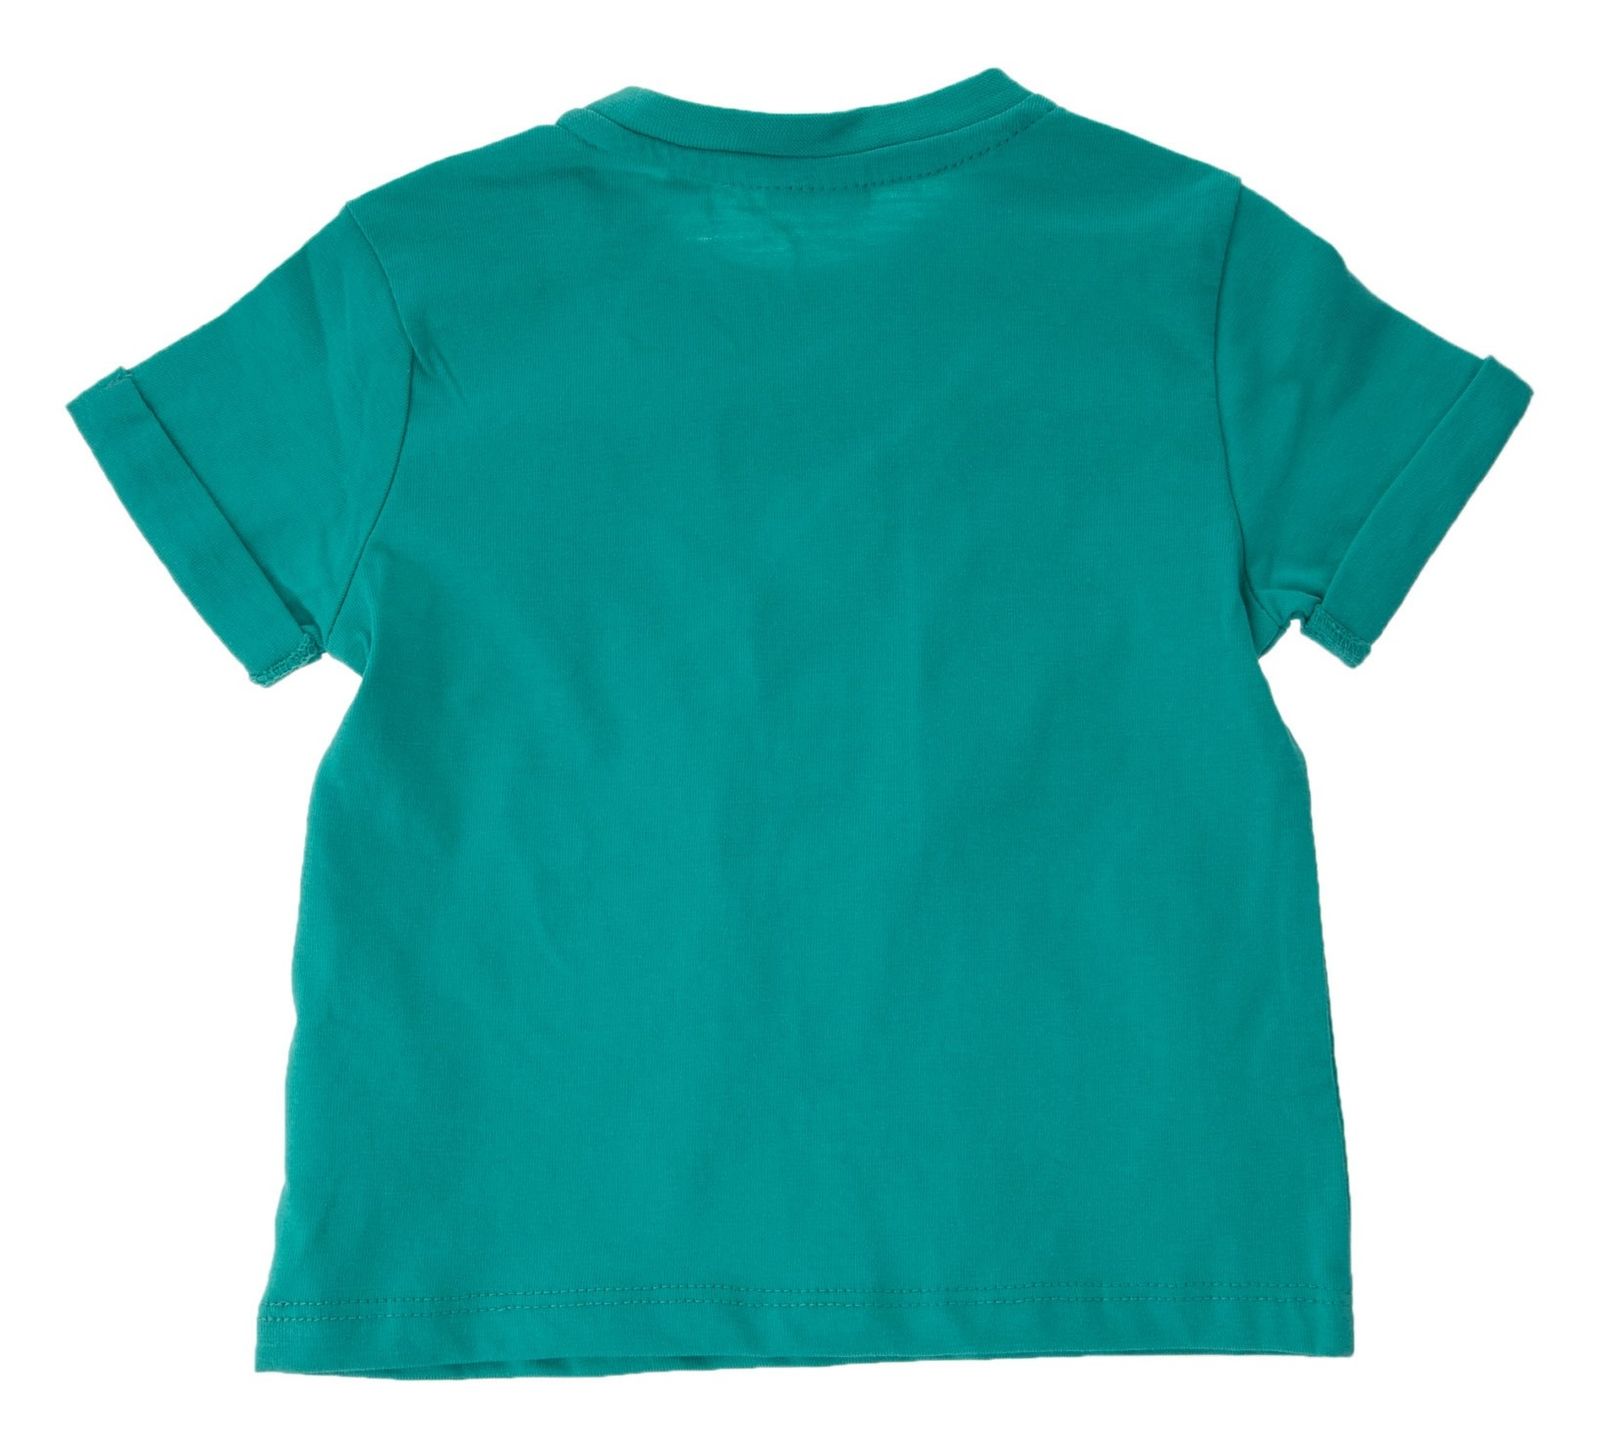 تی شرت و شلوارک نخی نوزادی پسرانه - بلوکیدز - سبز/سرمه اي - 4